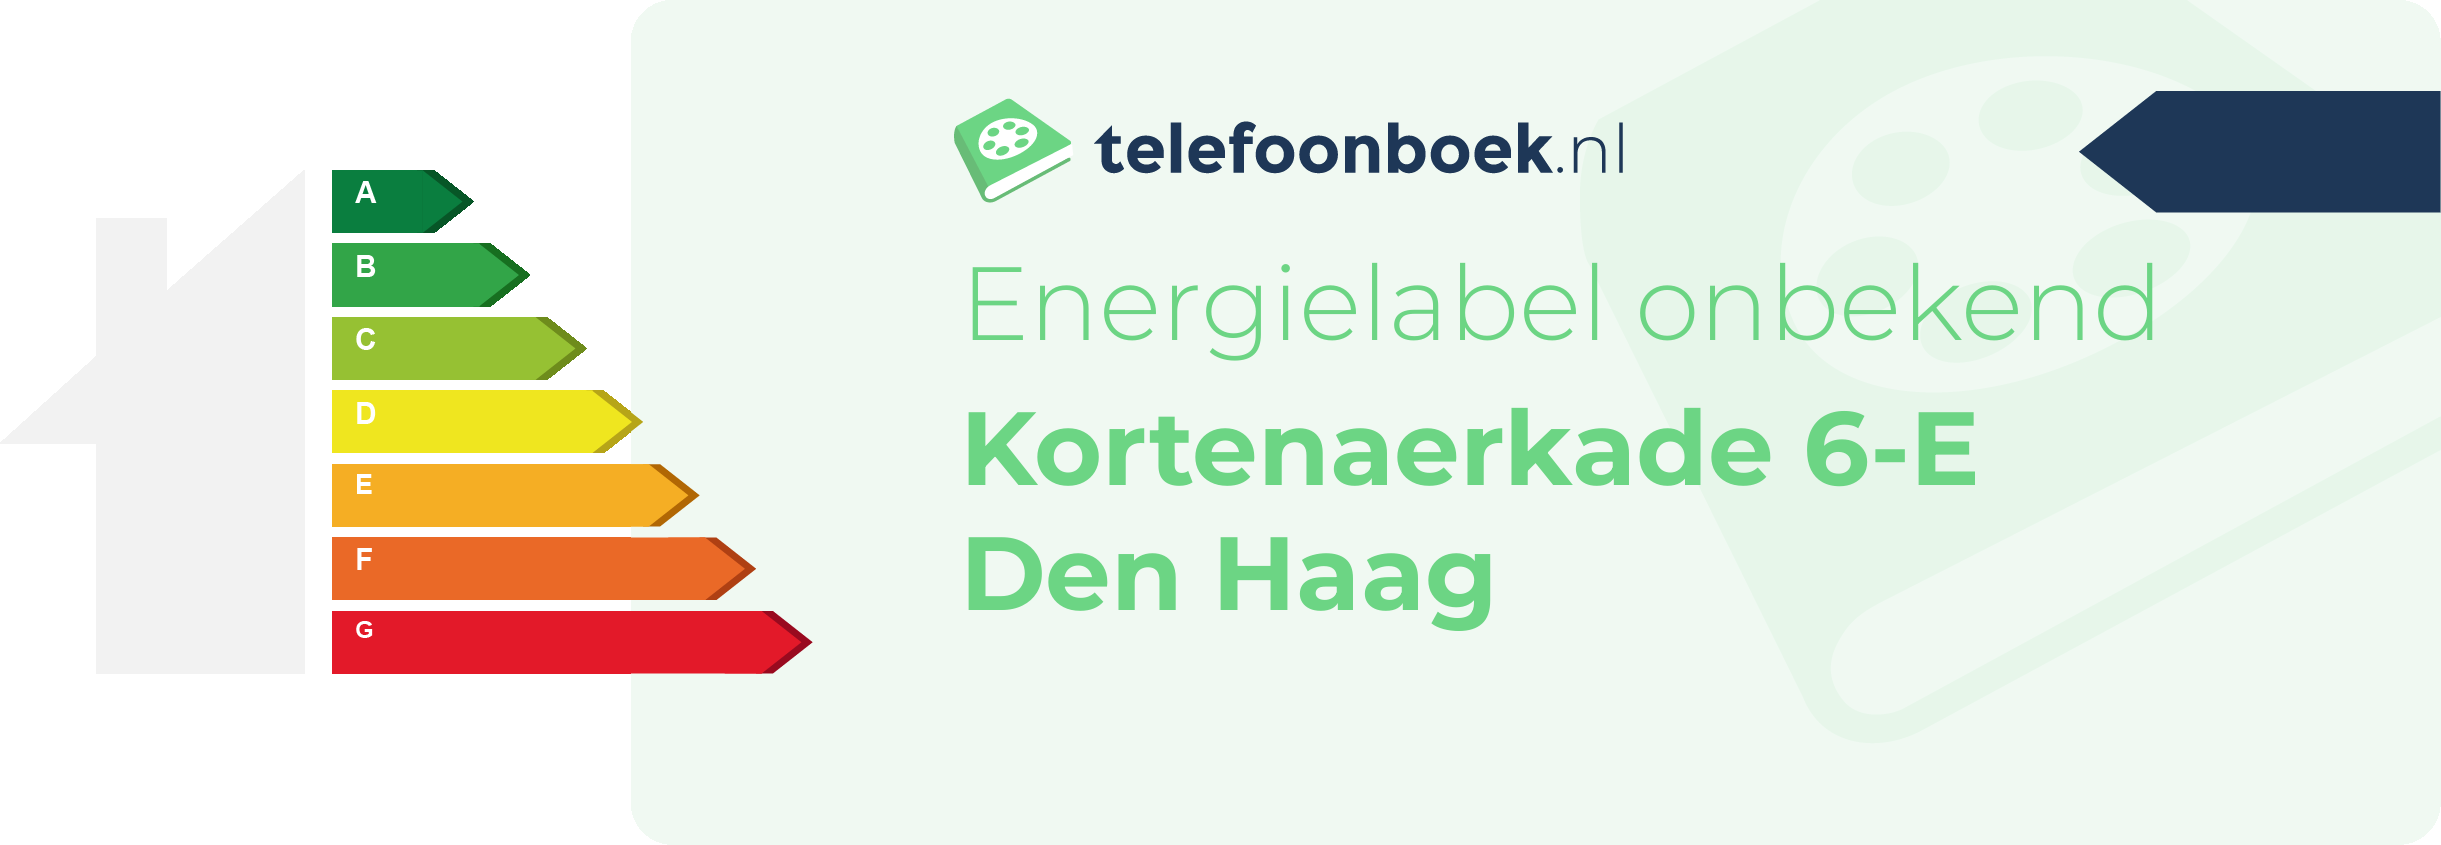 Energielabel Kortenaerkade 6-E Den Haag